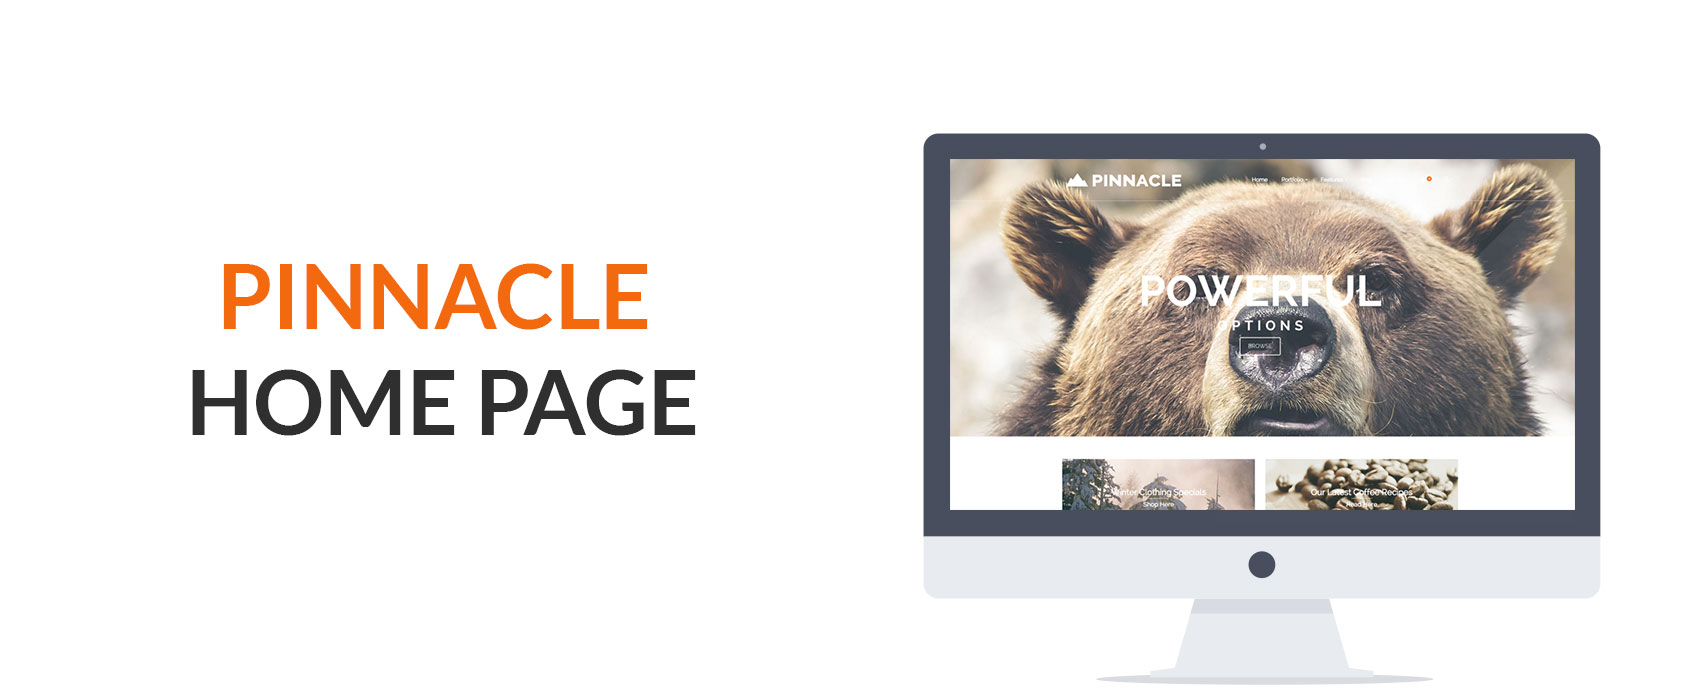 Home Page Pinnacle Premium